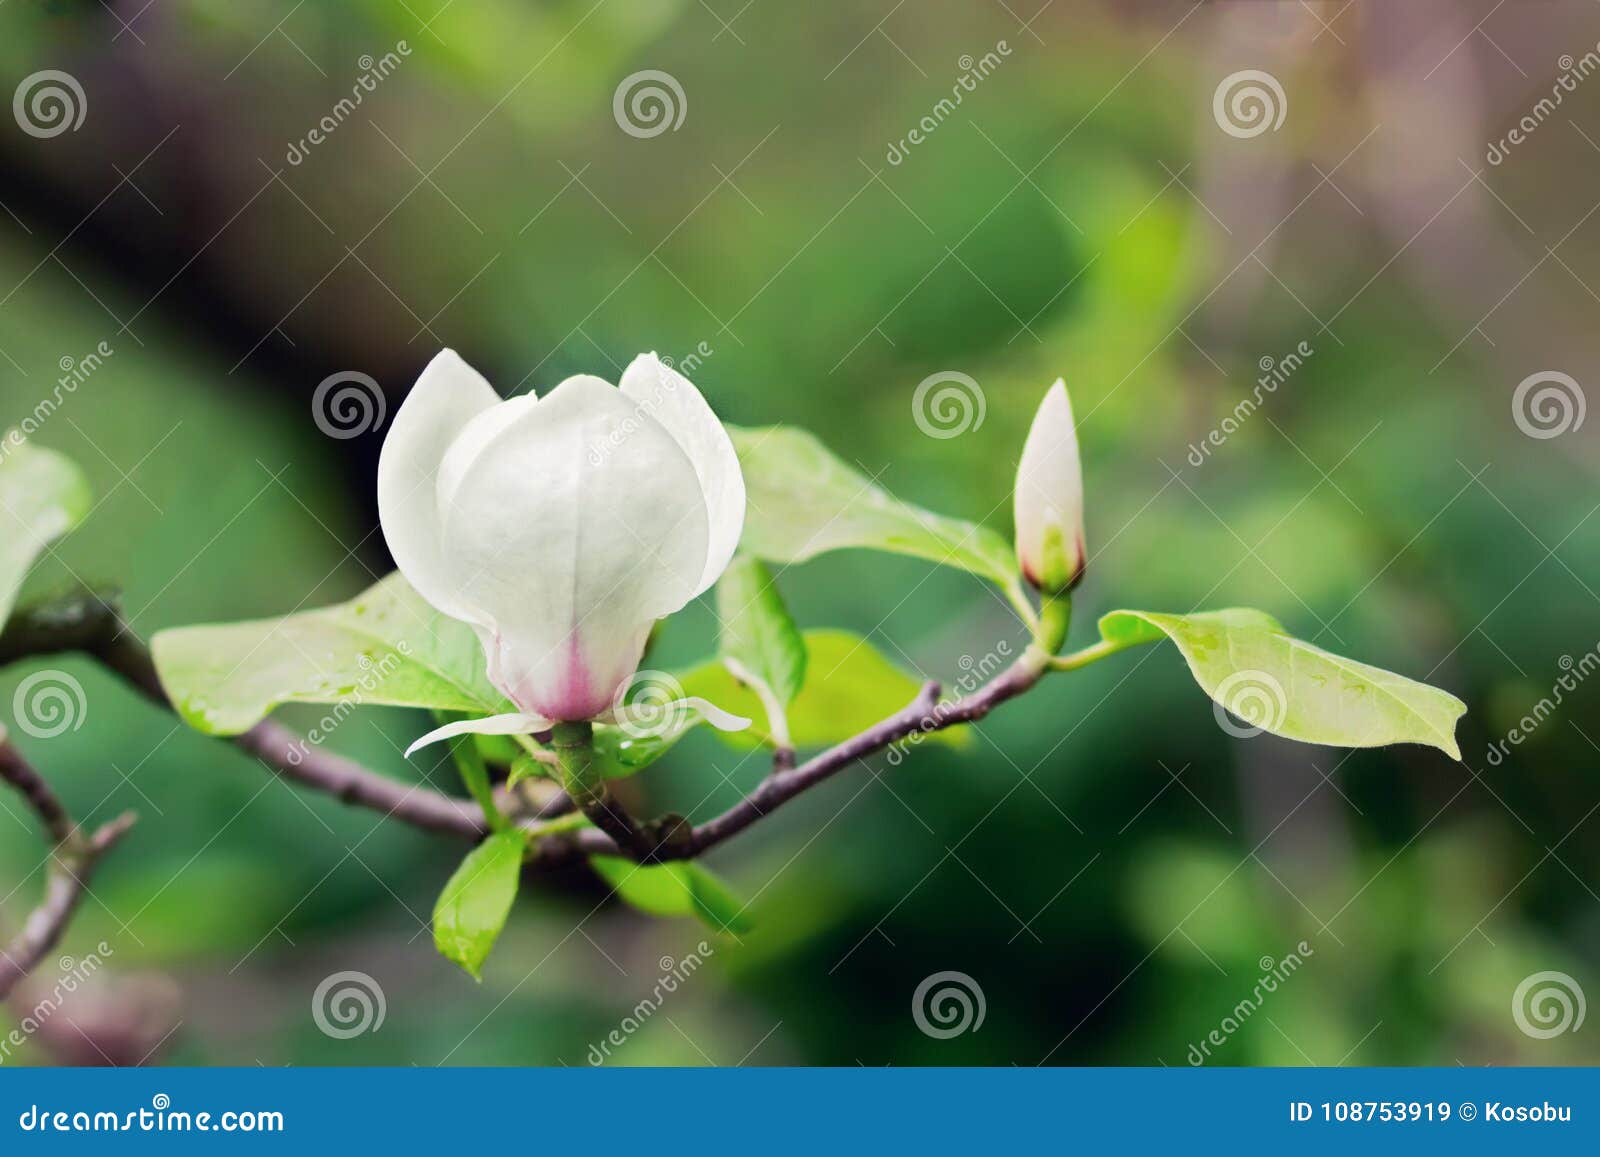 abloom flower of magnolia tree in summertime